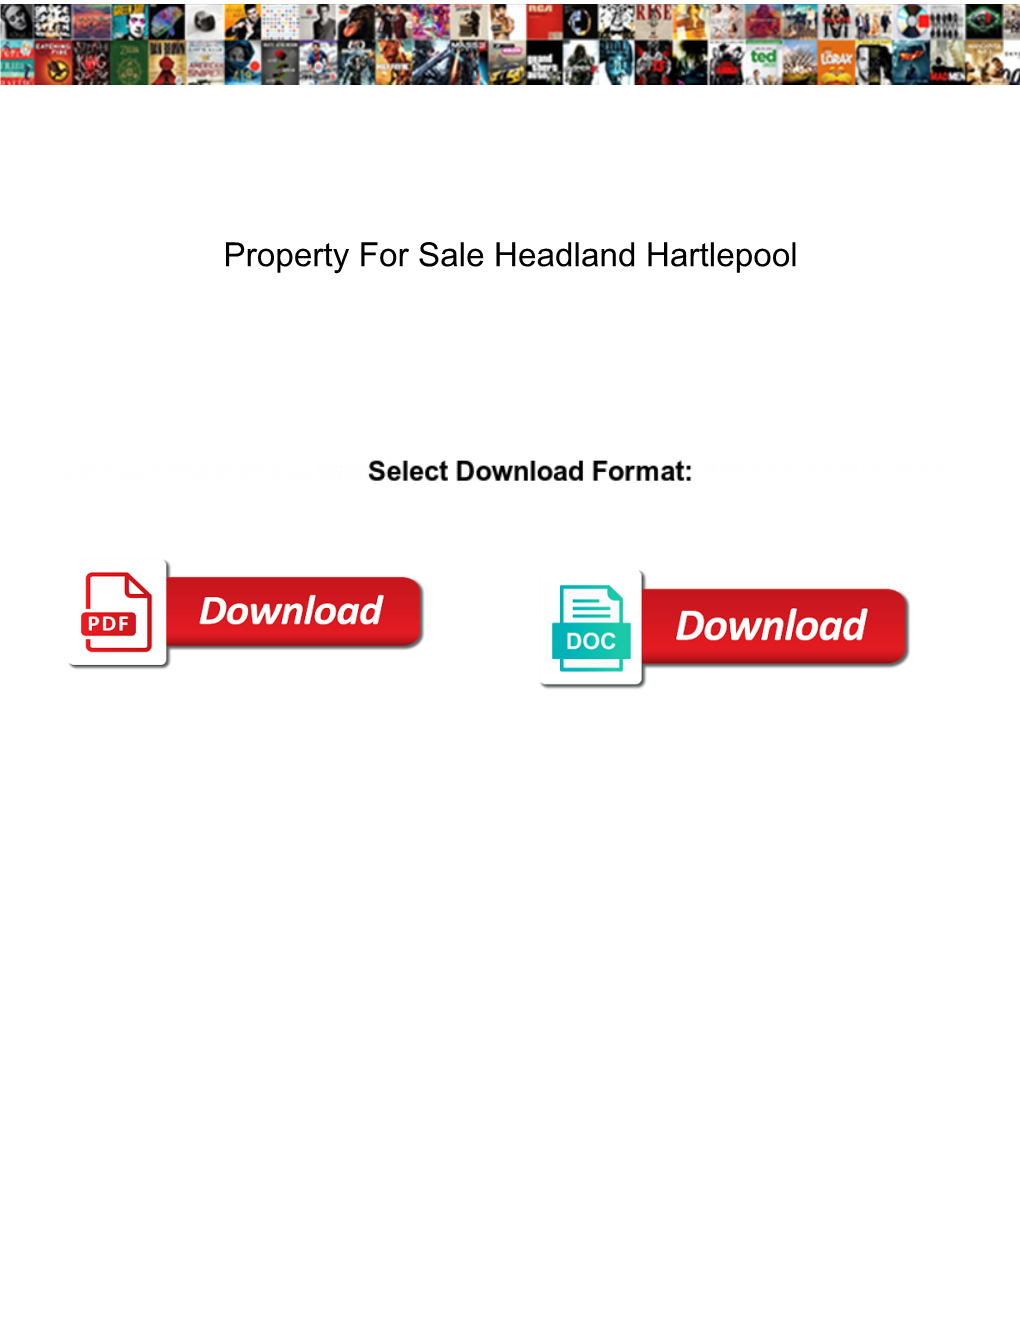 Property for Sale Headland Hartlepool